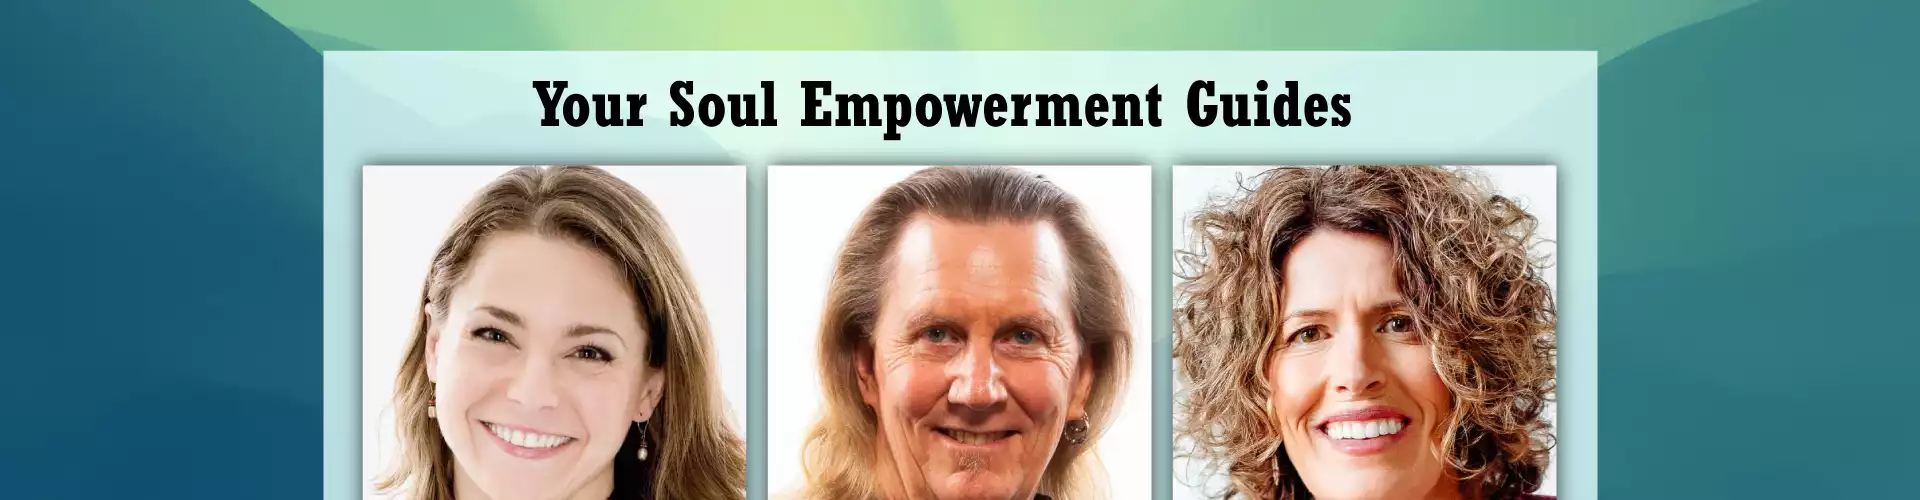 Soul Empowerment